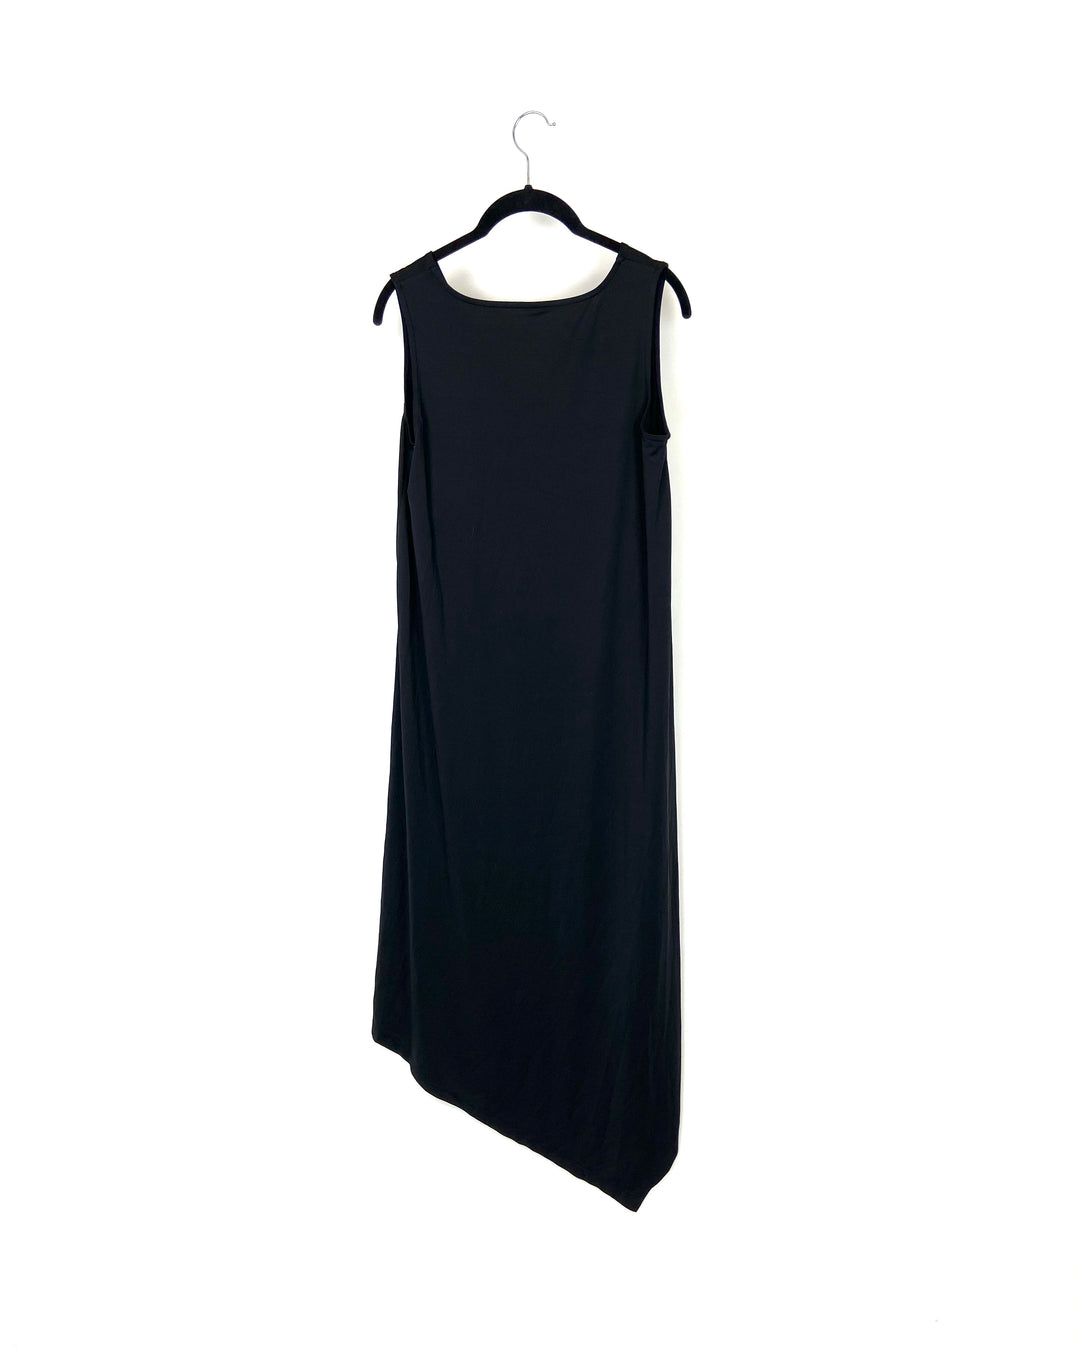 Black V-Neck Dress - 1X